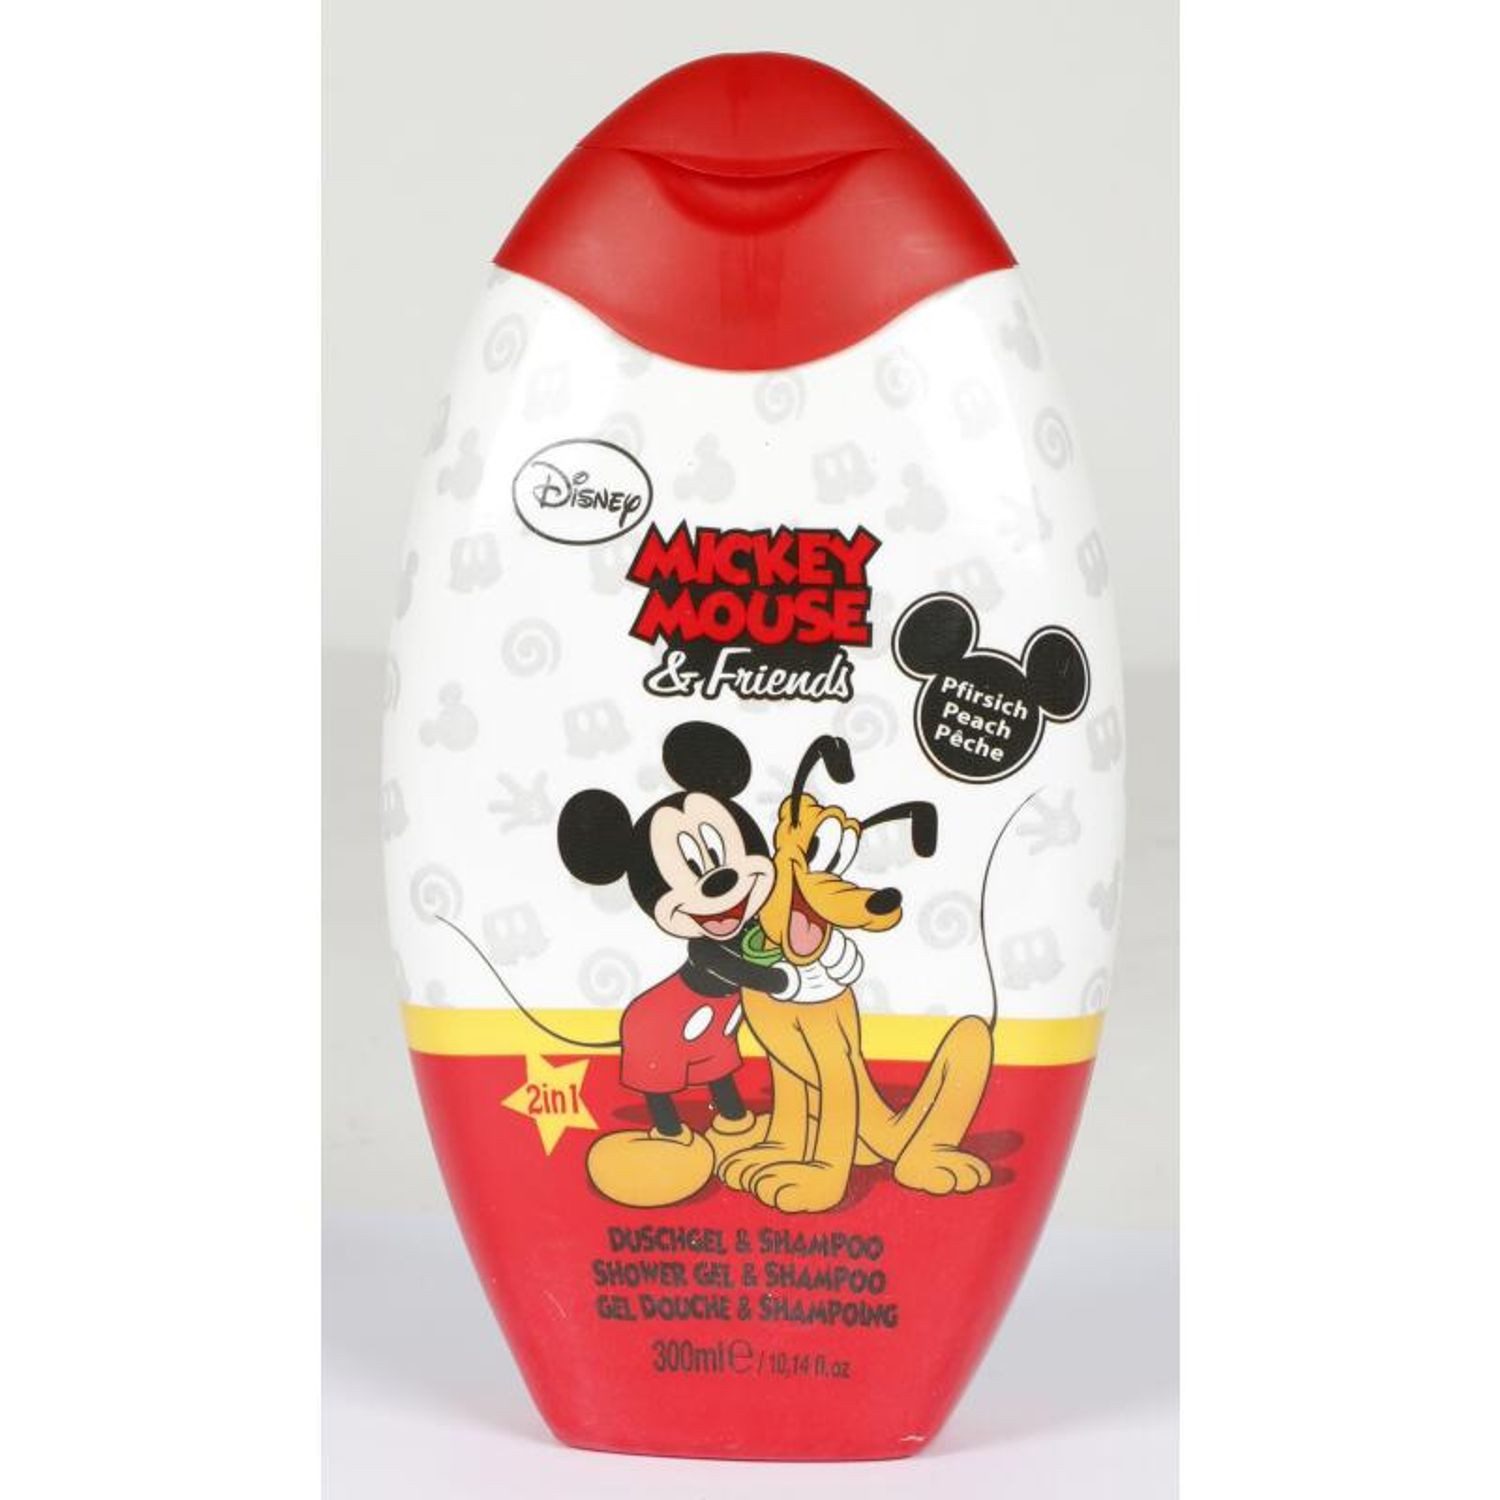 Max Brands Duschgel 12x 300ml Disney Mickey Mouse & Friends Shampoo Duschgel 2in1 Haare Kö